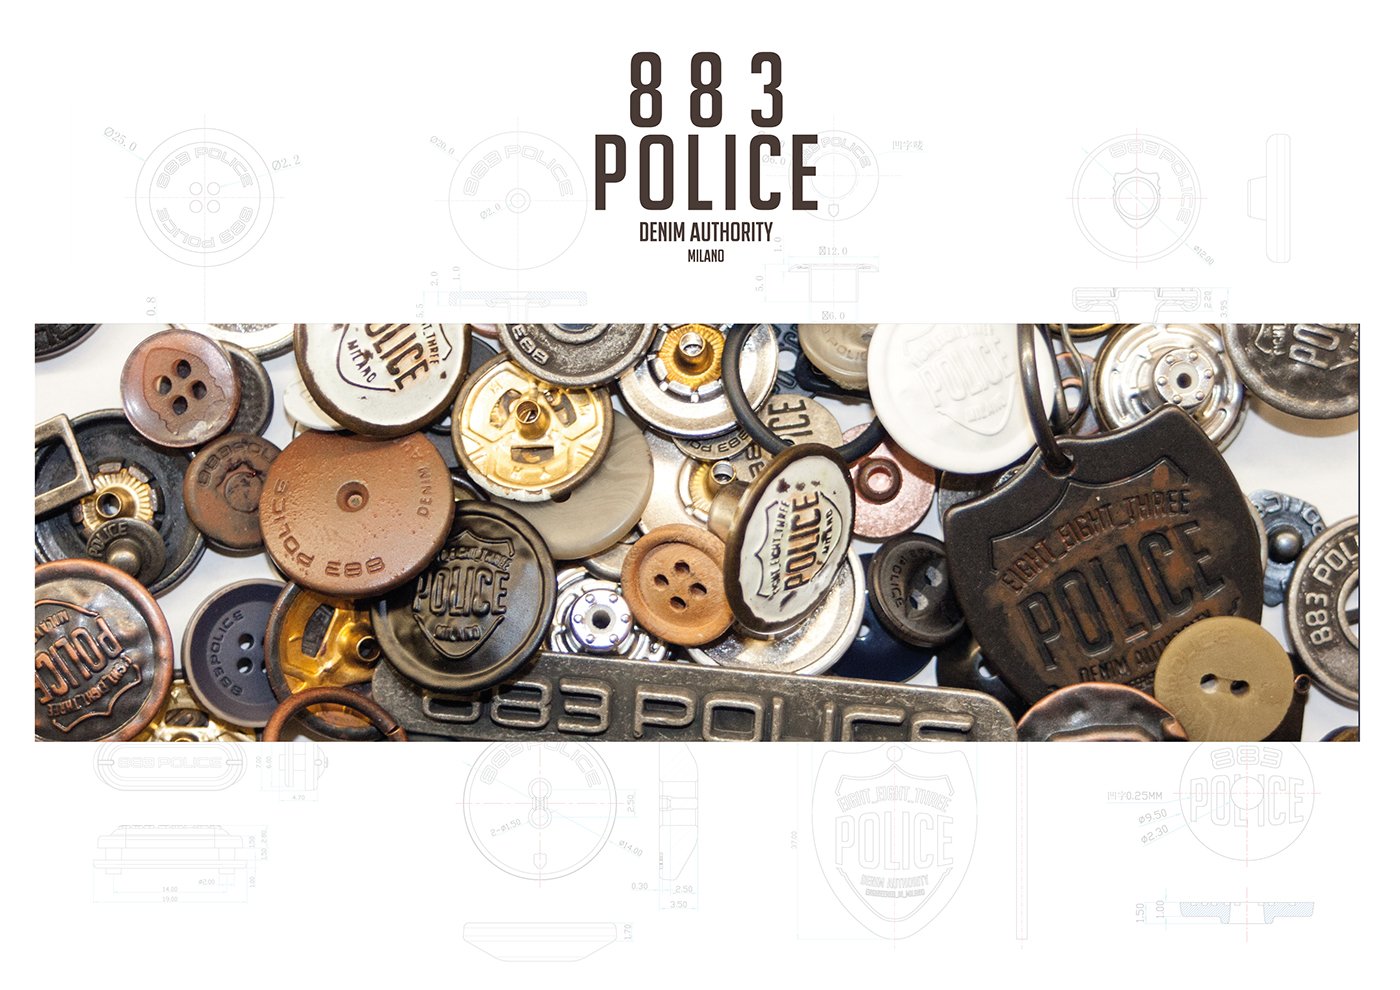 883police apparel branding TRIMS apparel Clothing branding buttons Wovens